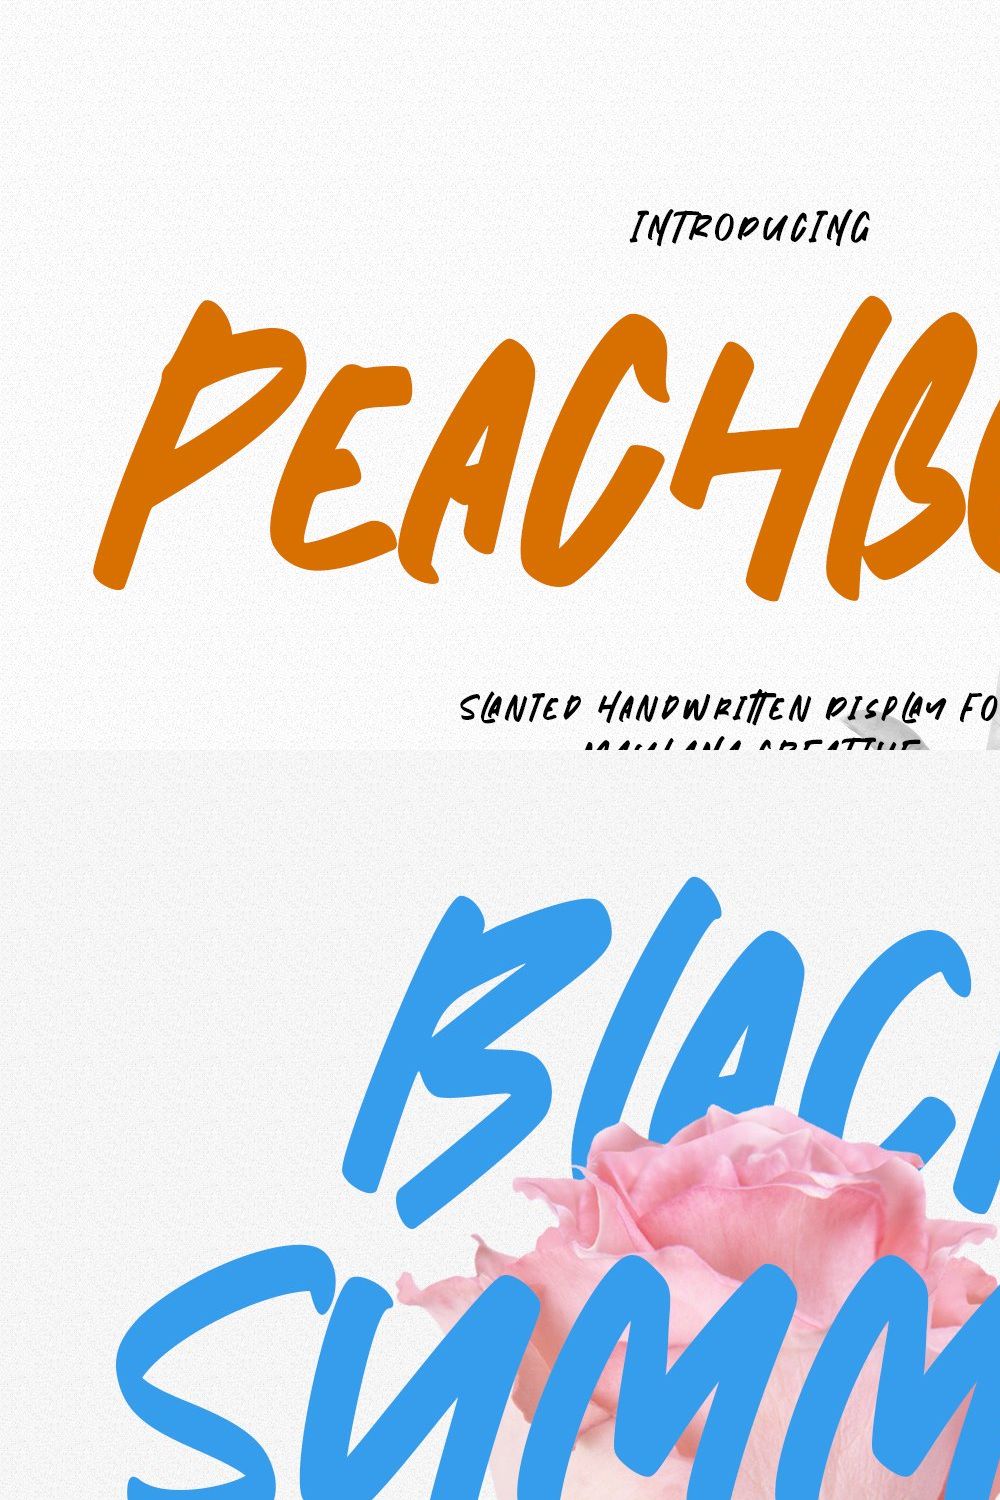 Peachboys Handwritten Font pinterest preview image.